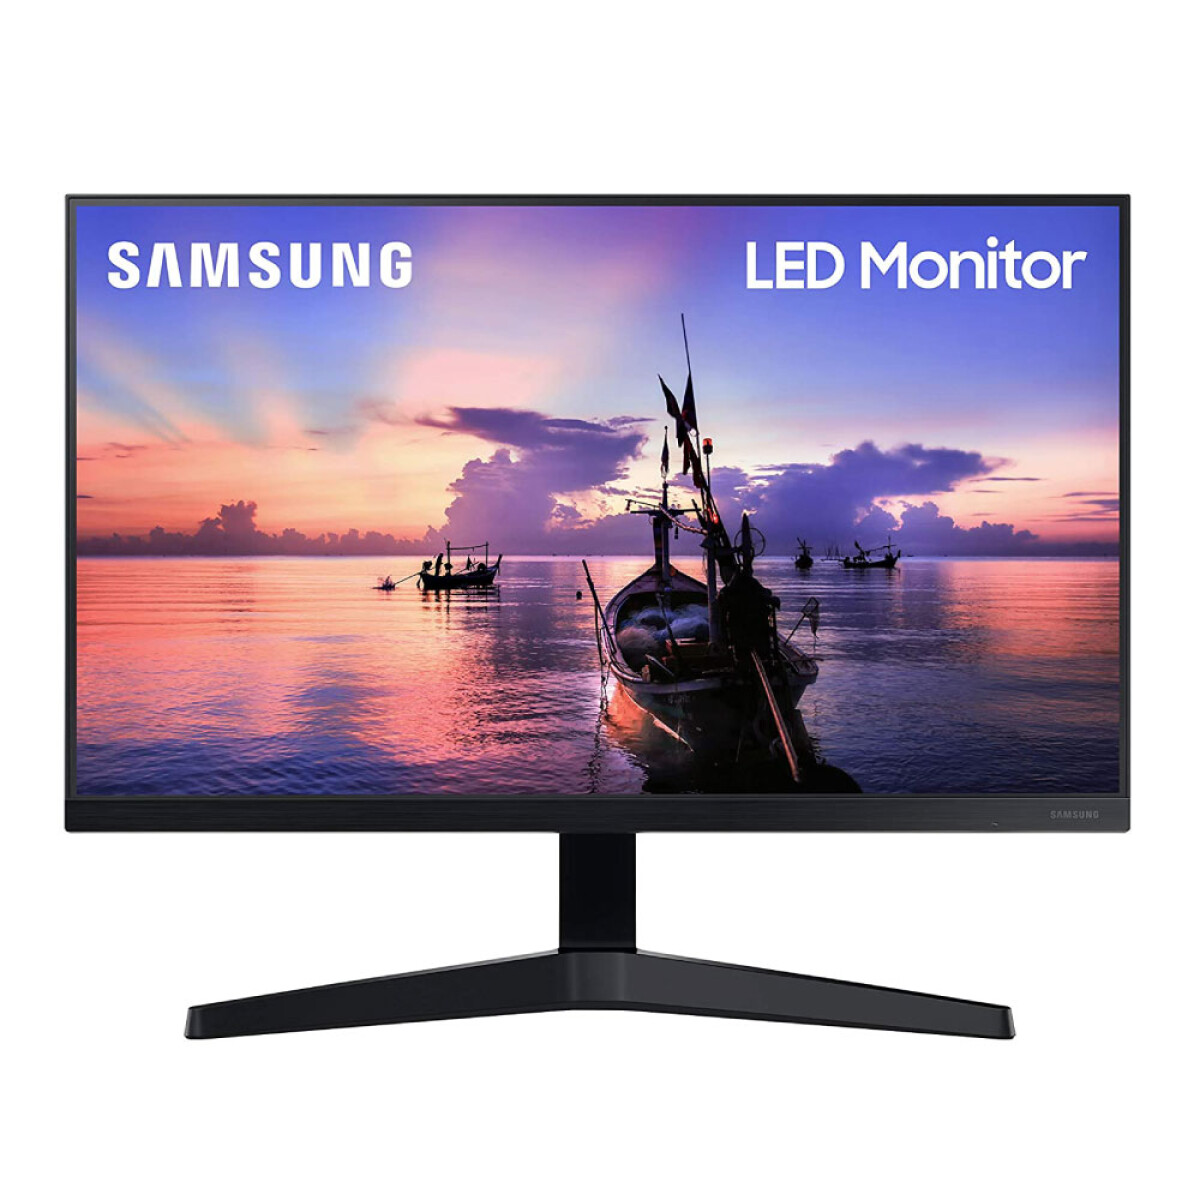 Monitor Gamer Samsung F22t35 Led 22 Dark Blue Gray 100v/240v 